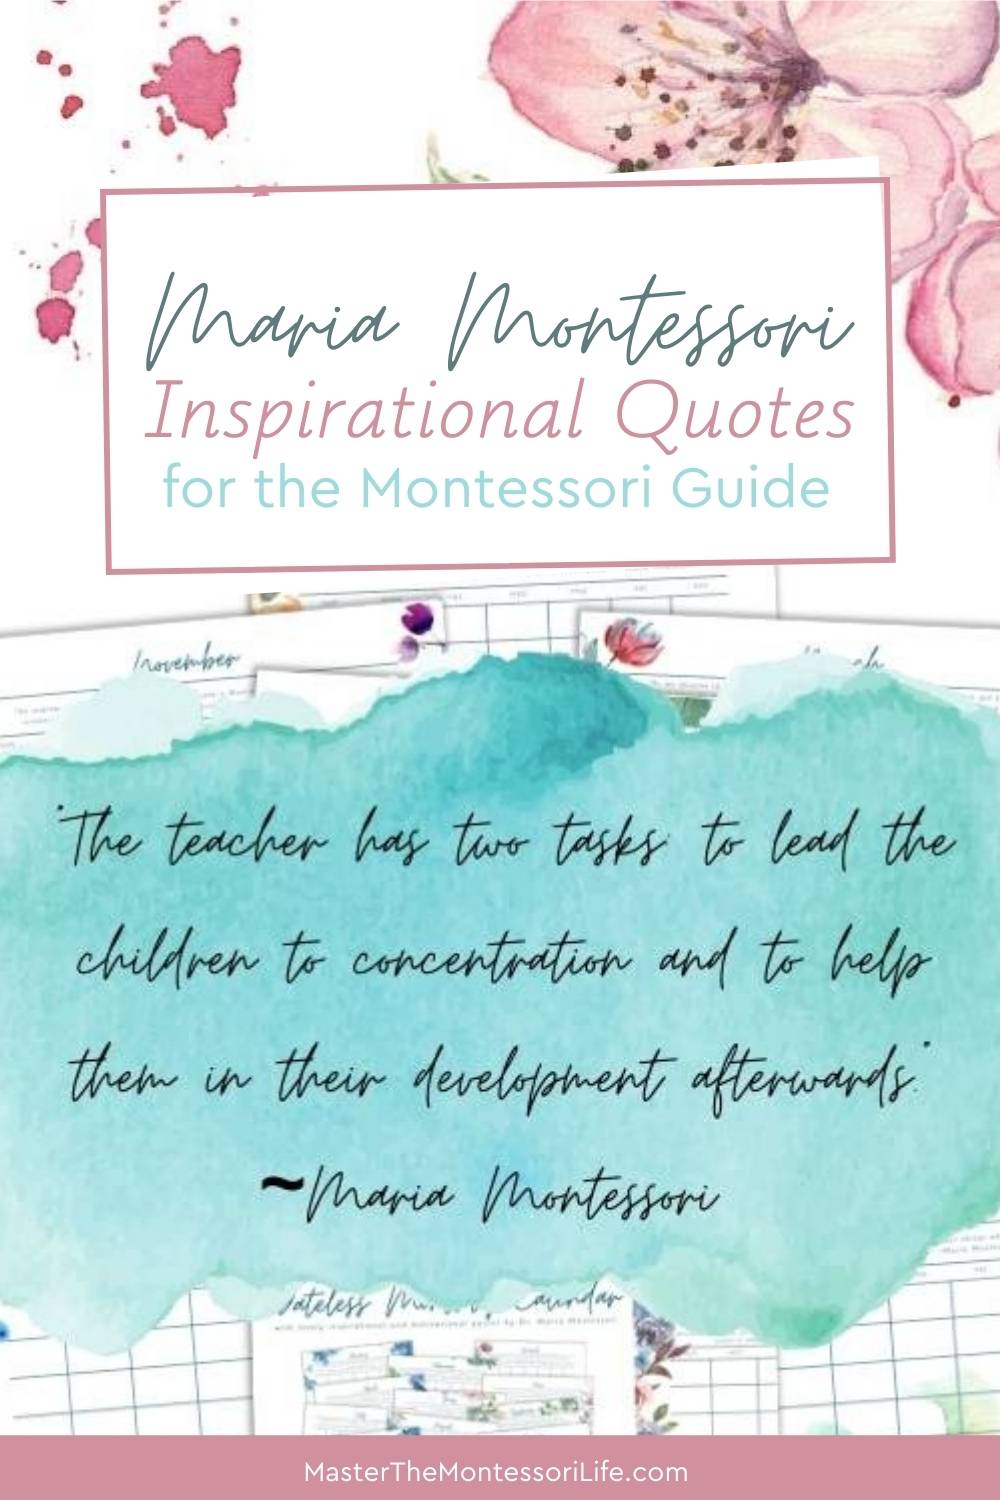 50 Inspirational Maria Montessori Quotes That Celebrate Education